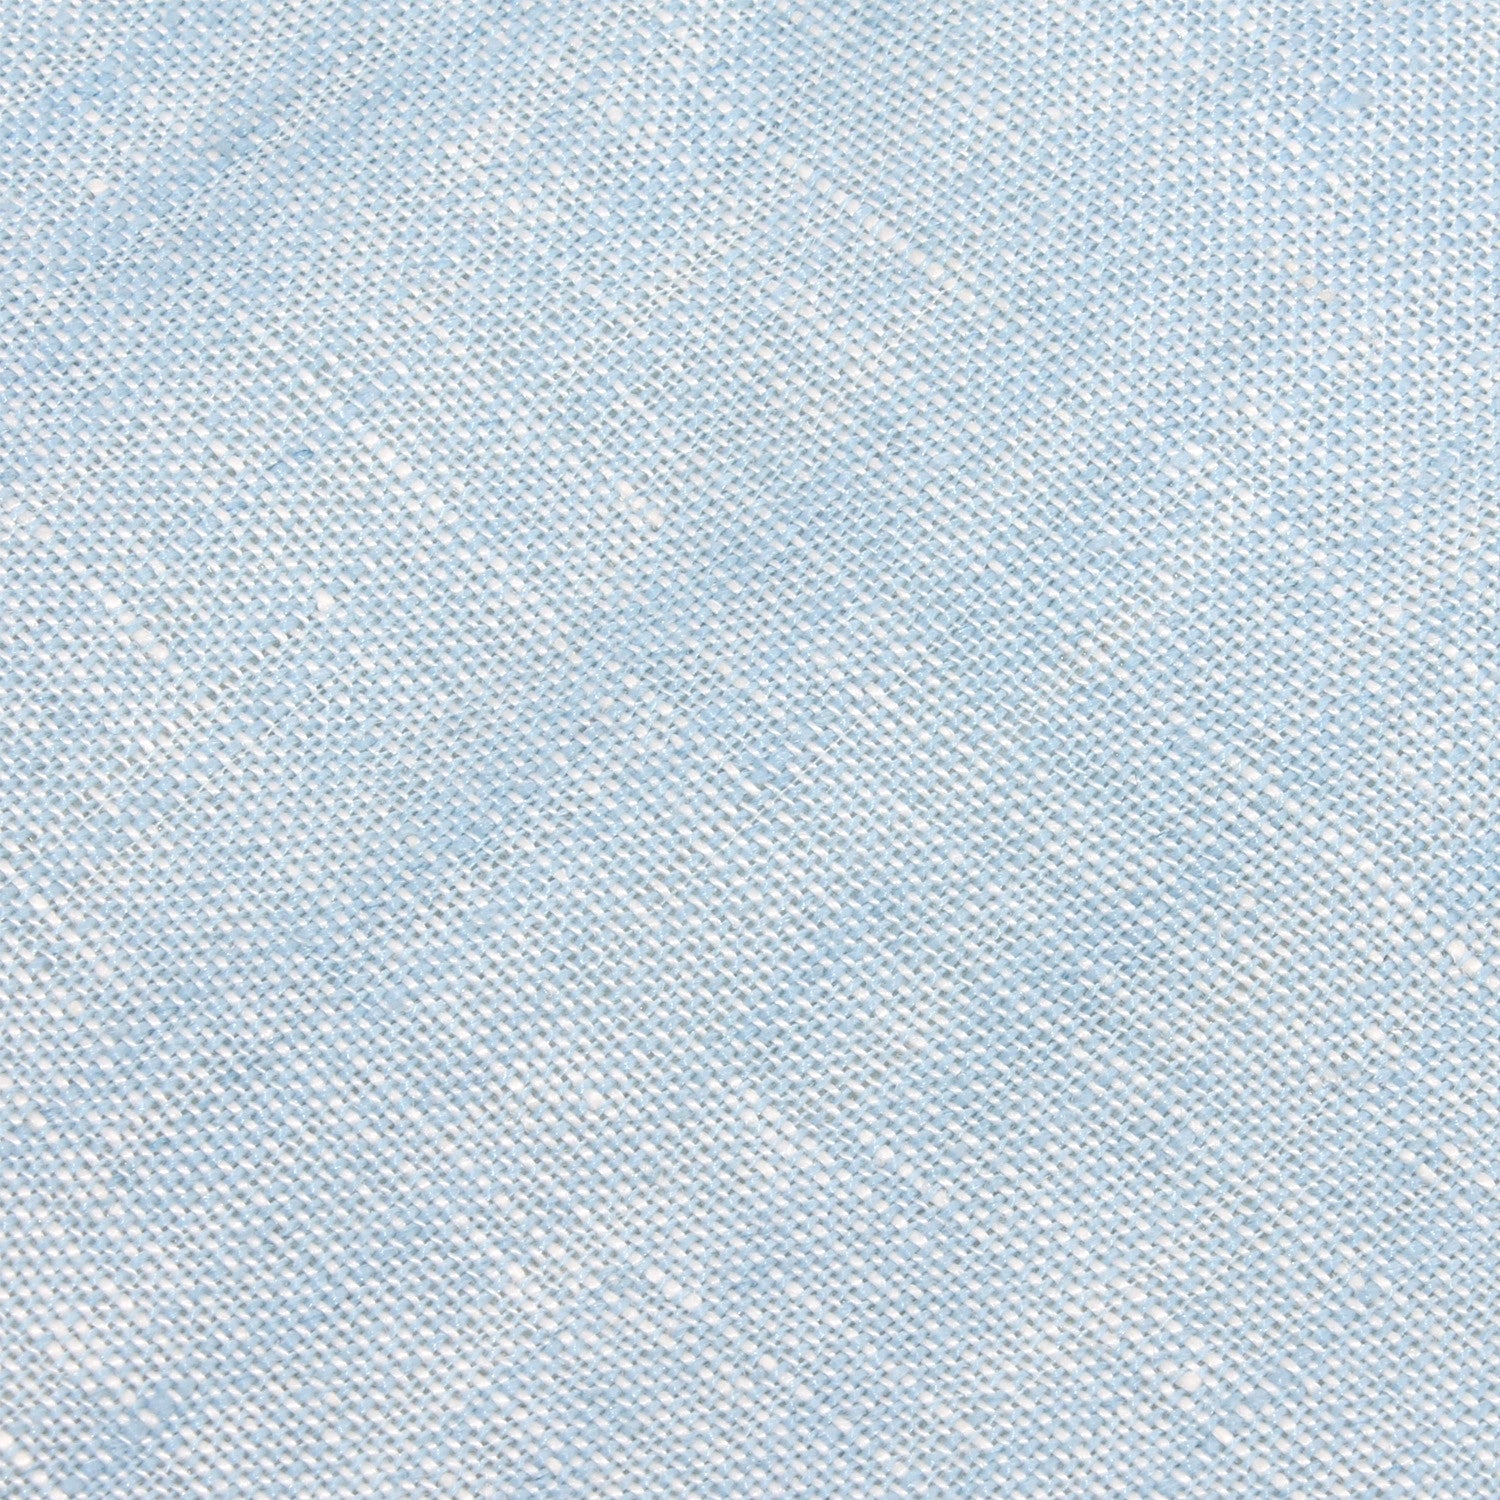 Light Blue Linen Chambray Necktie Fabric